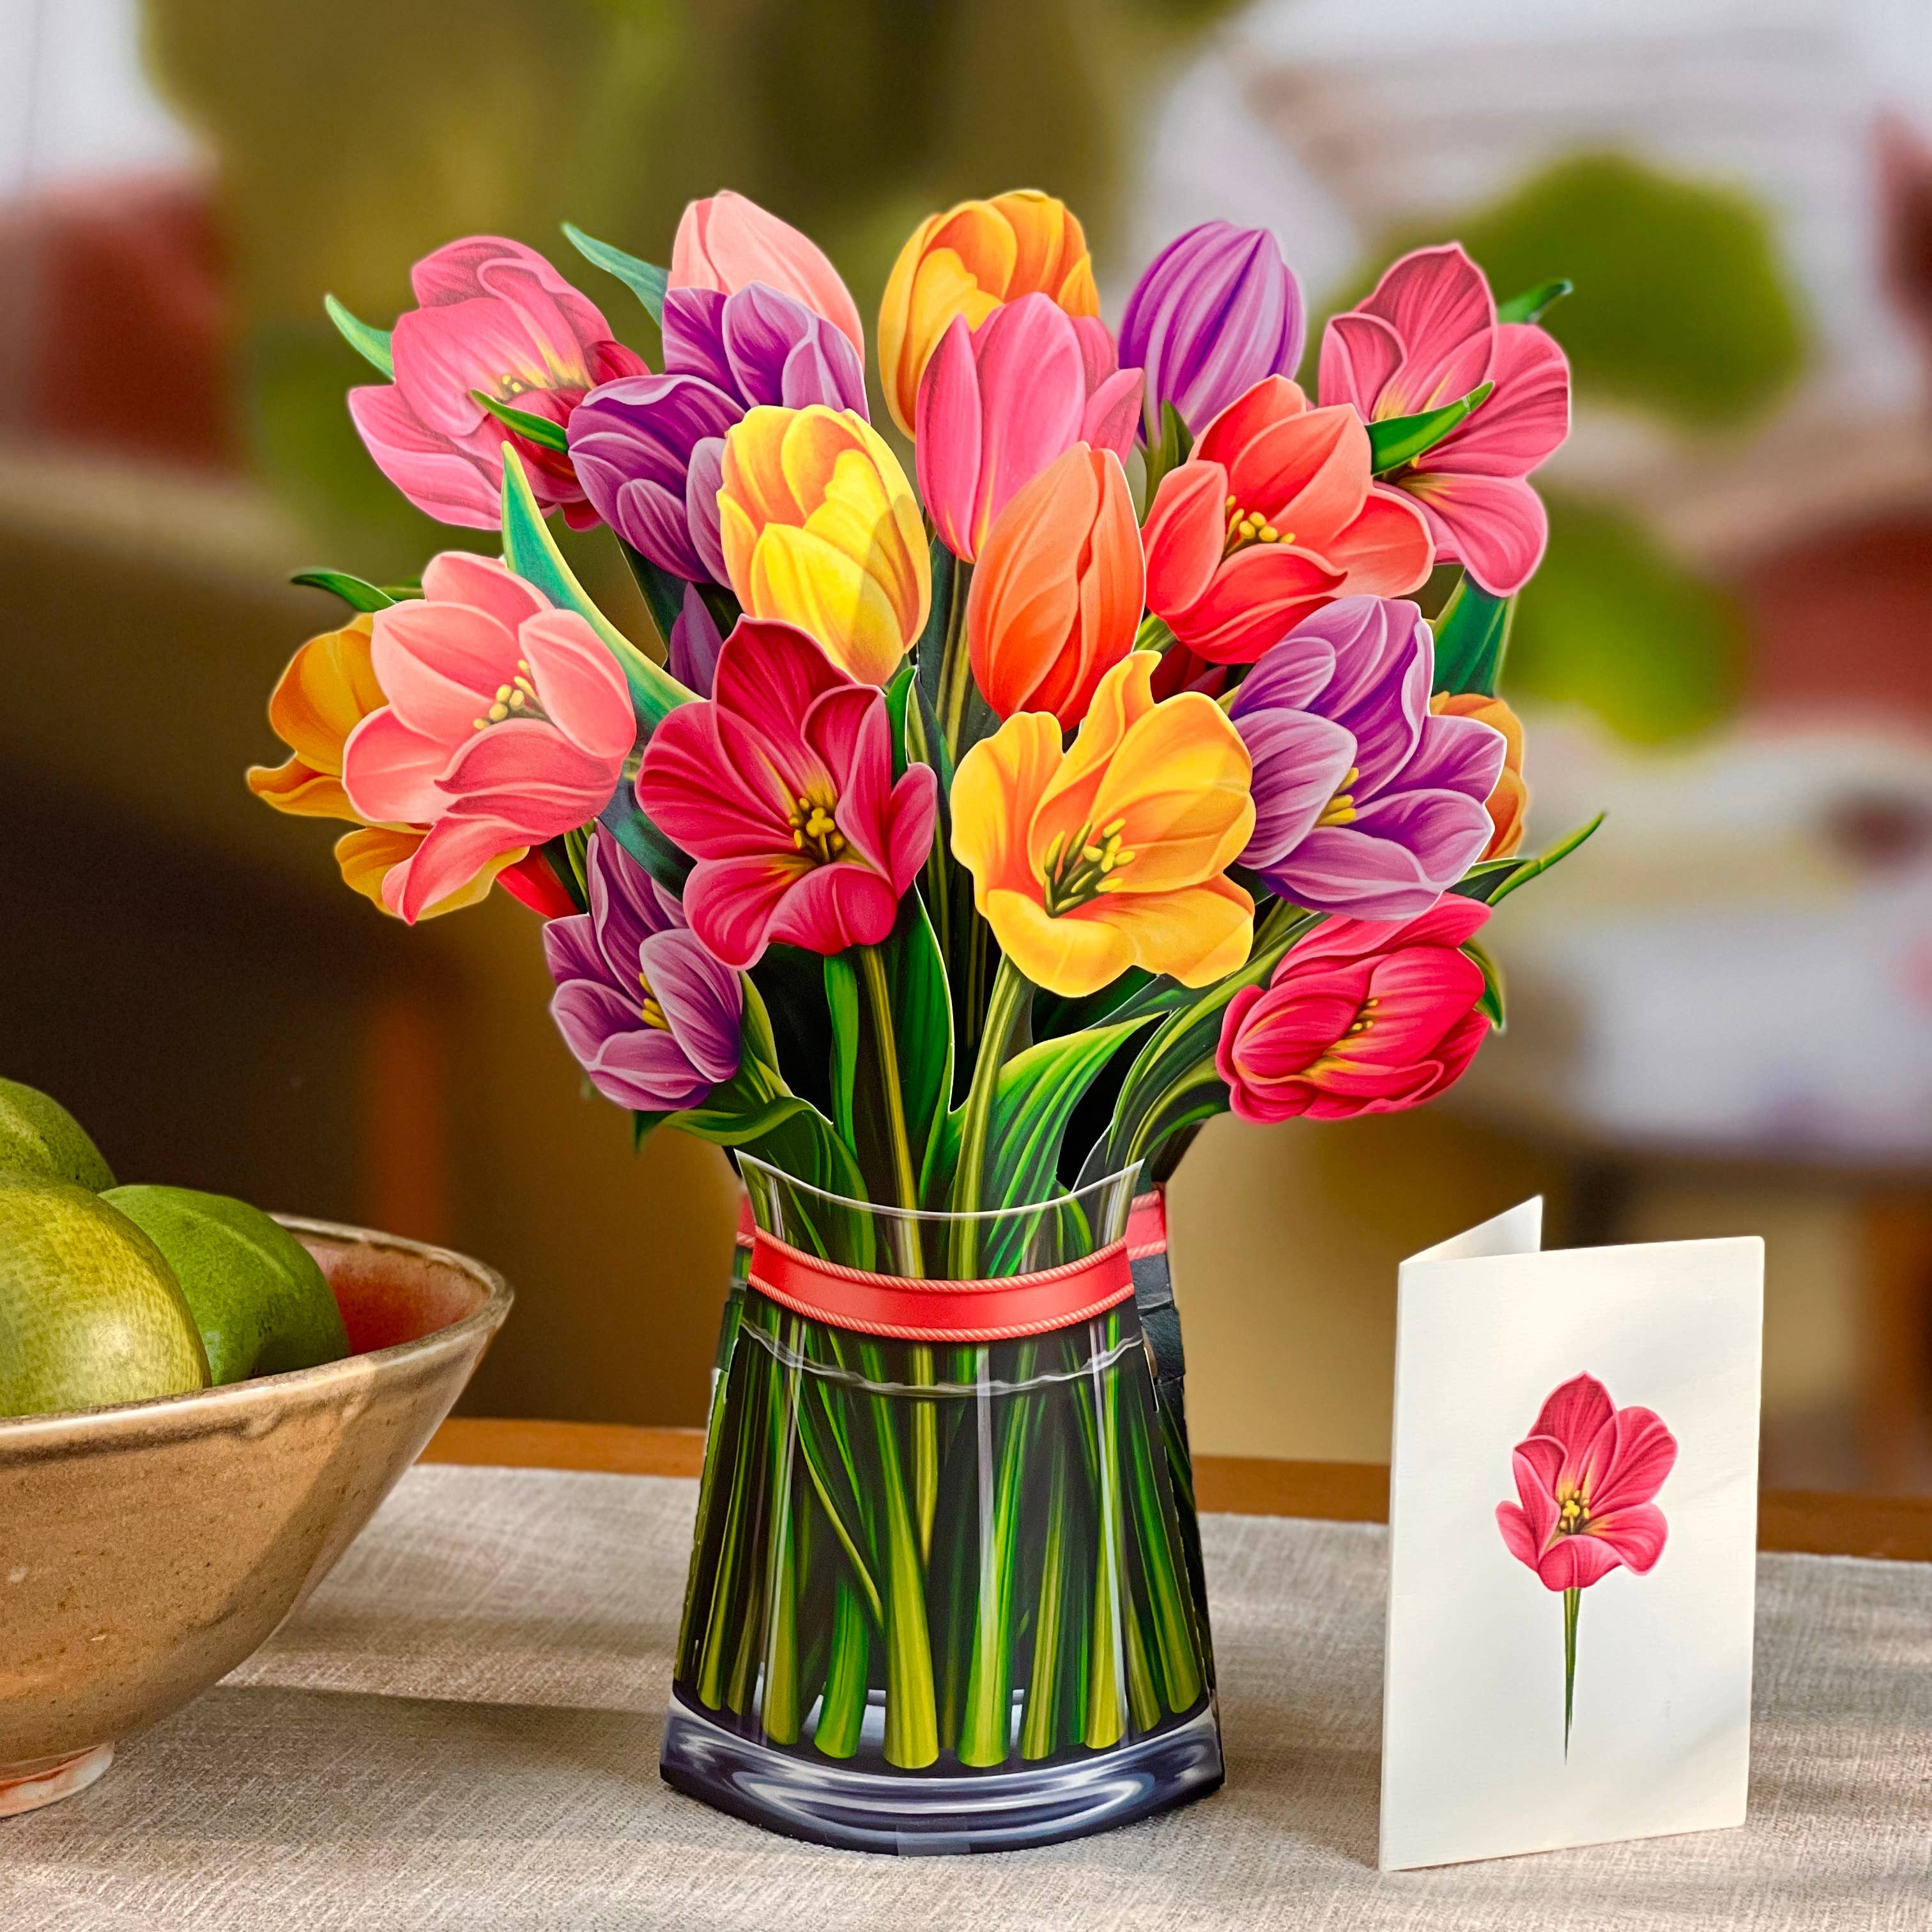 Festive Tulips Pop Up Greeting Card